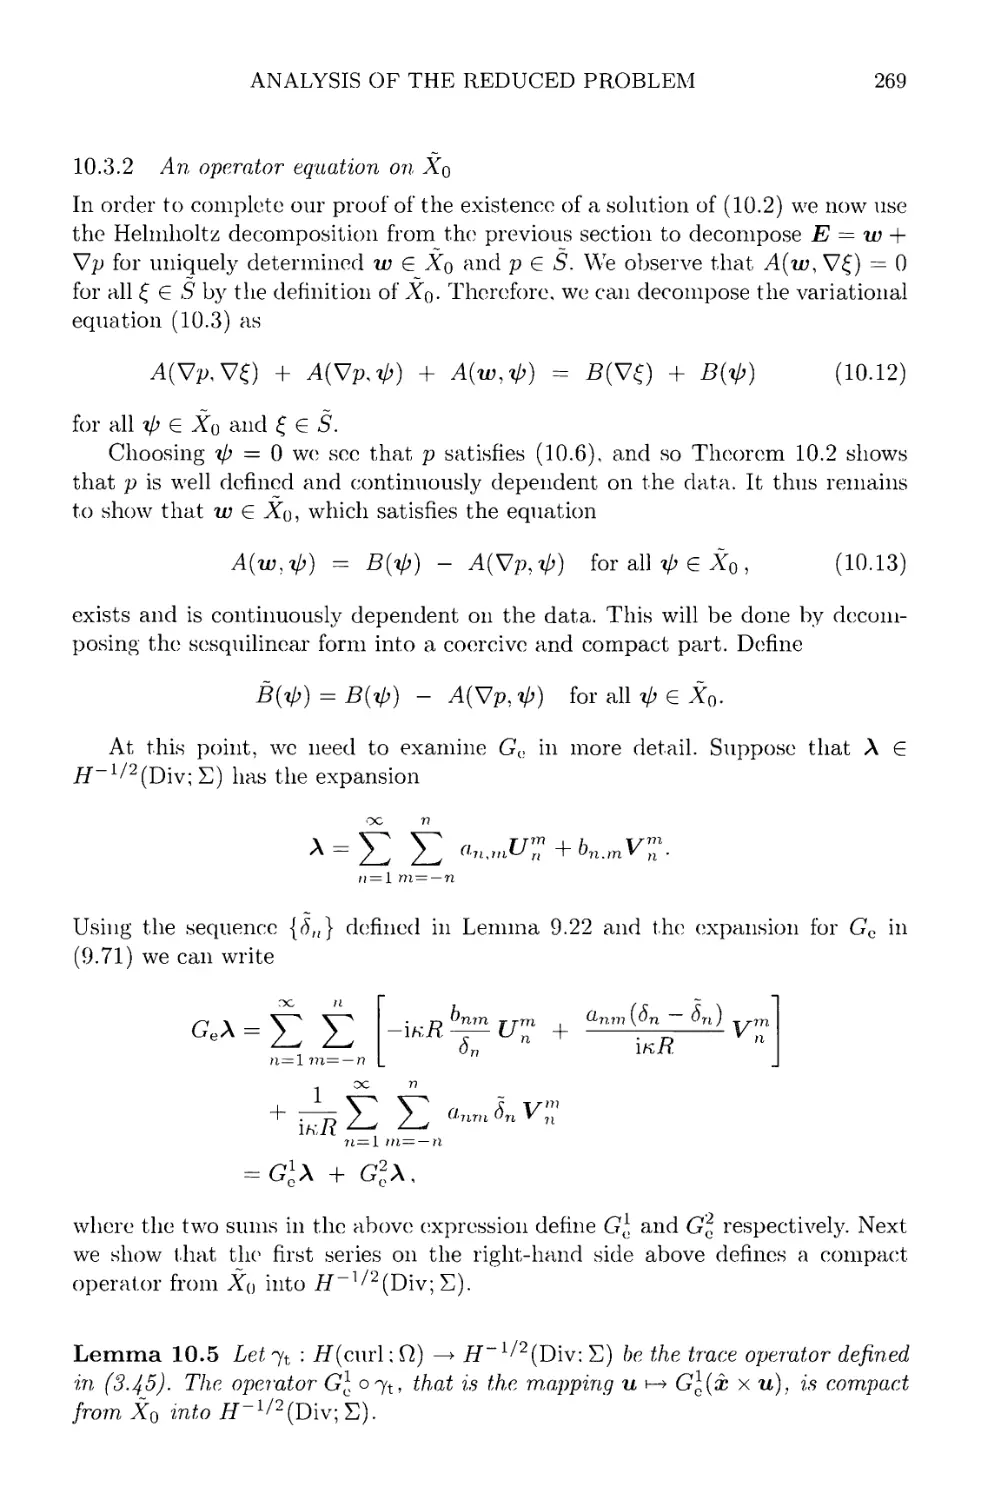 10.3.2 An operator equation on $\tilde{X}_0$